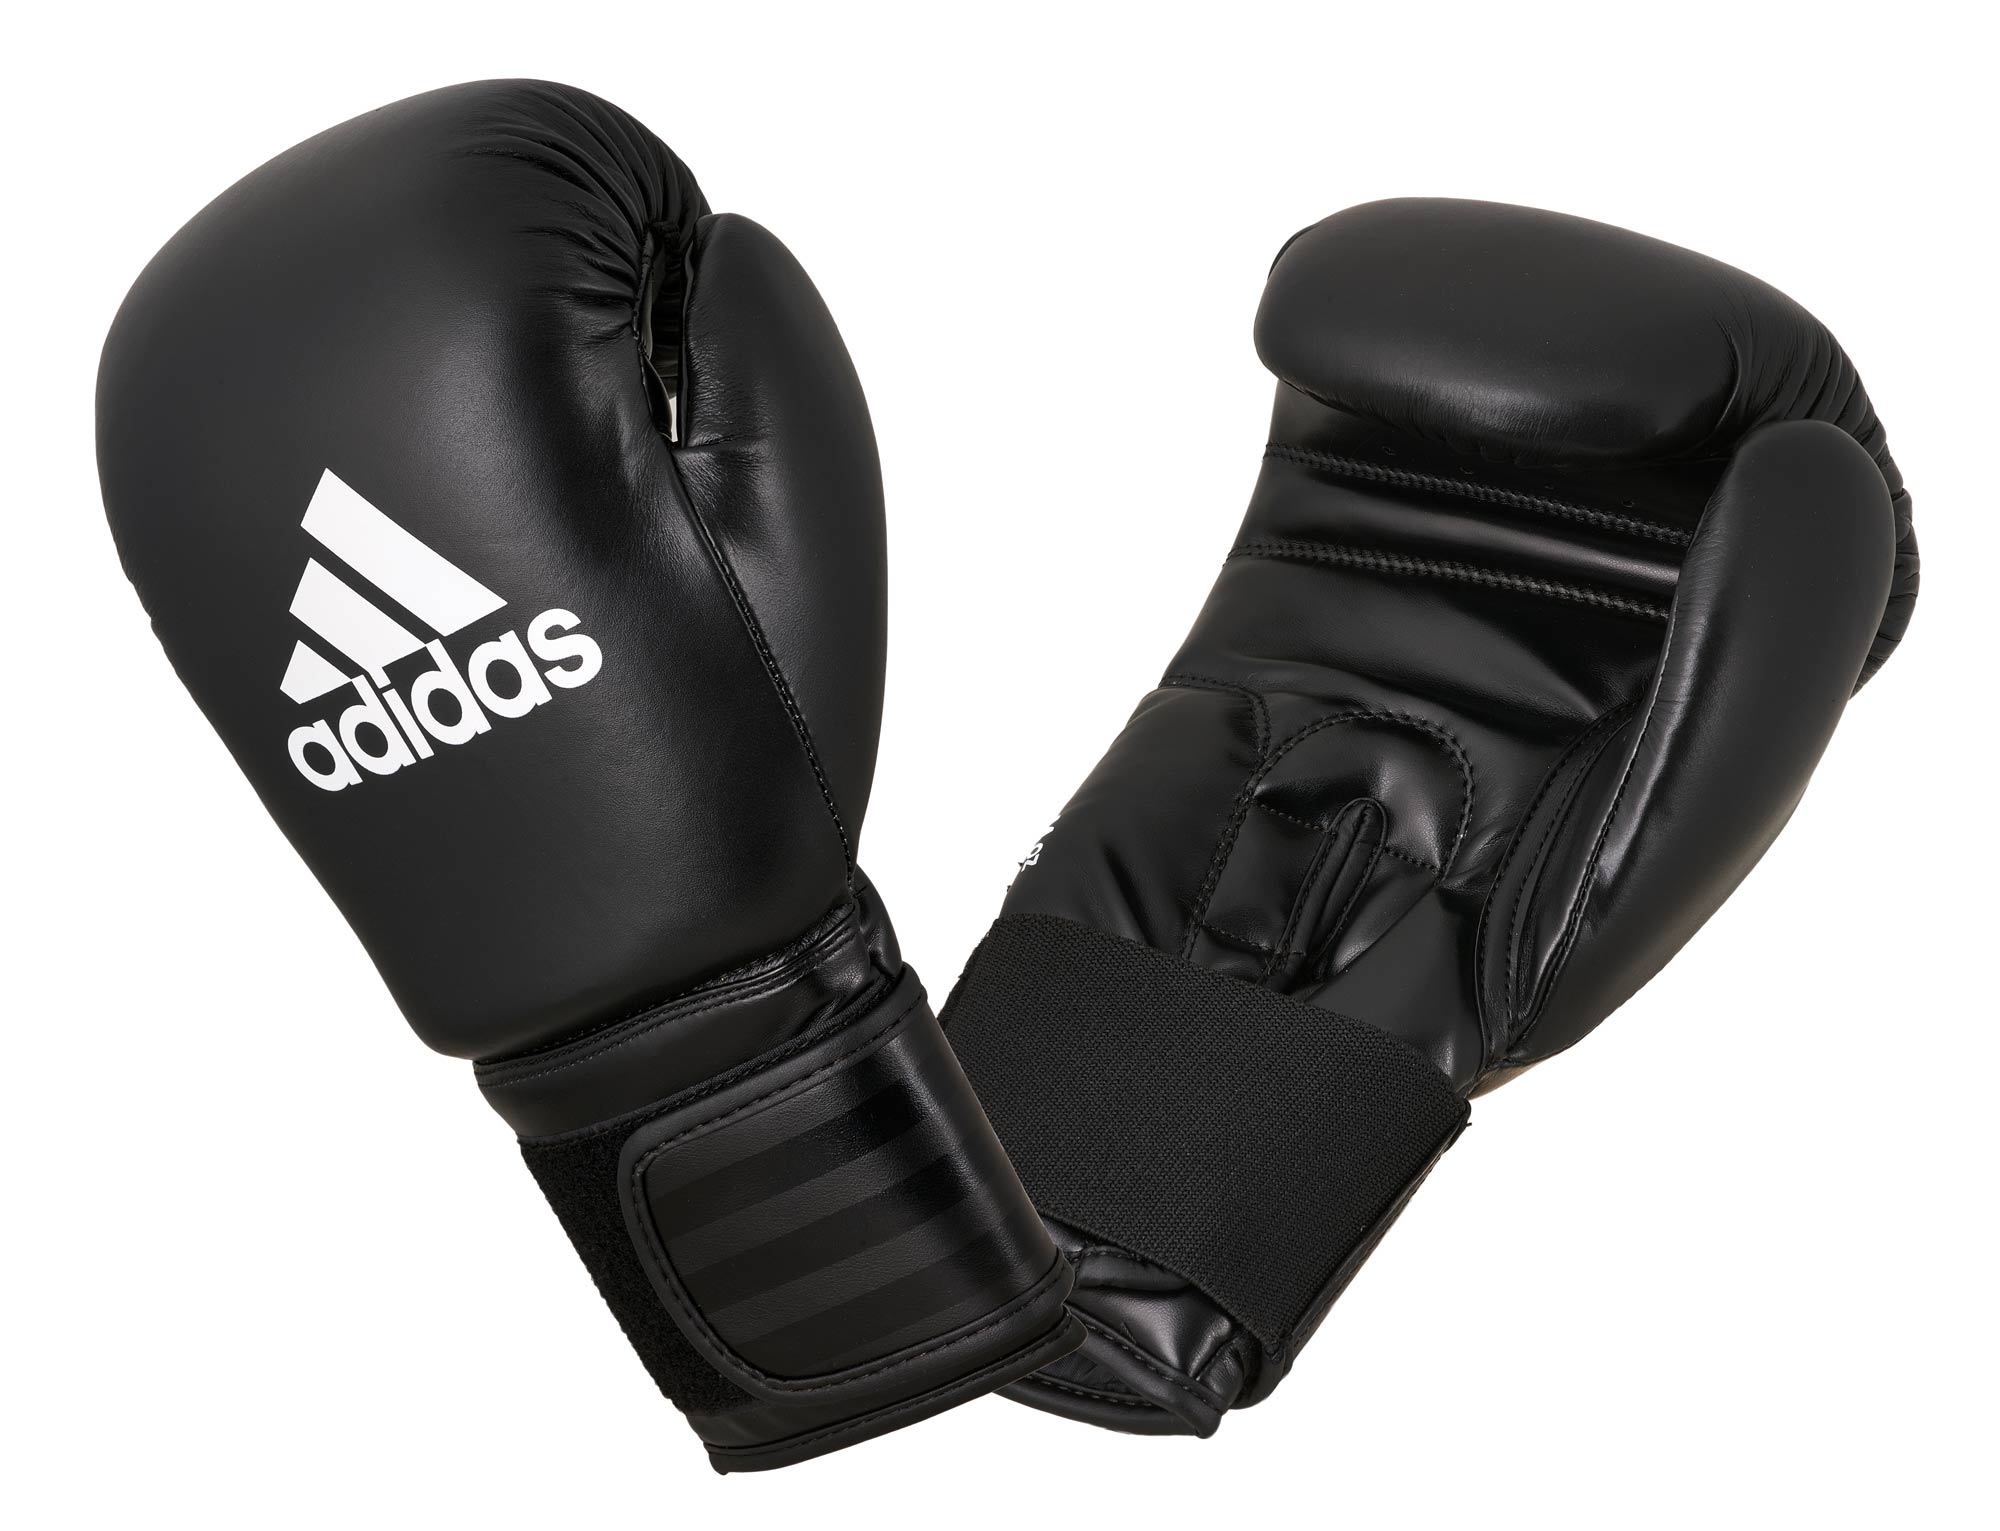 KAMPFHELDEN schwarz Boxhandschuhe Performer ADIBC01 | Adidas